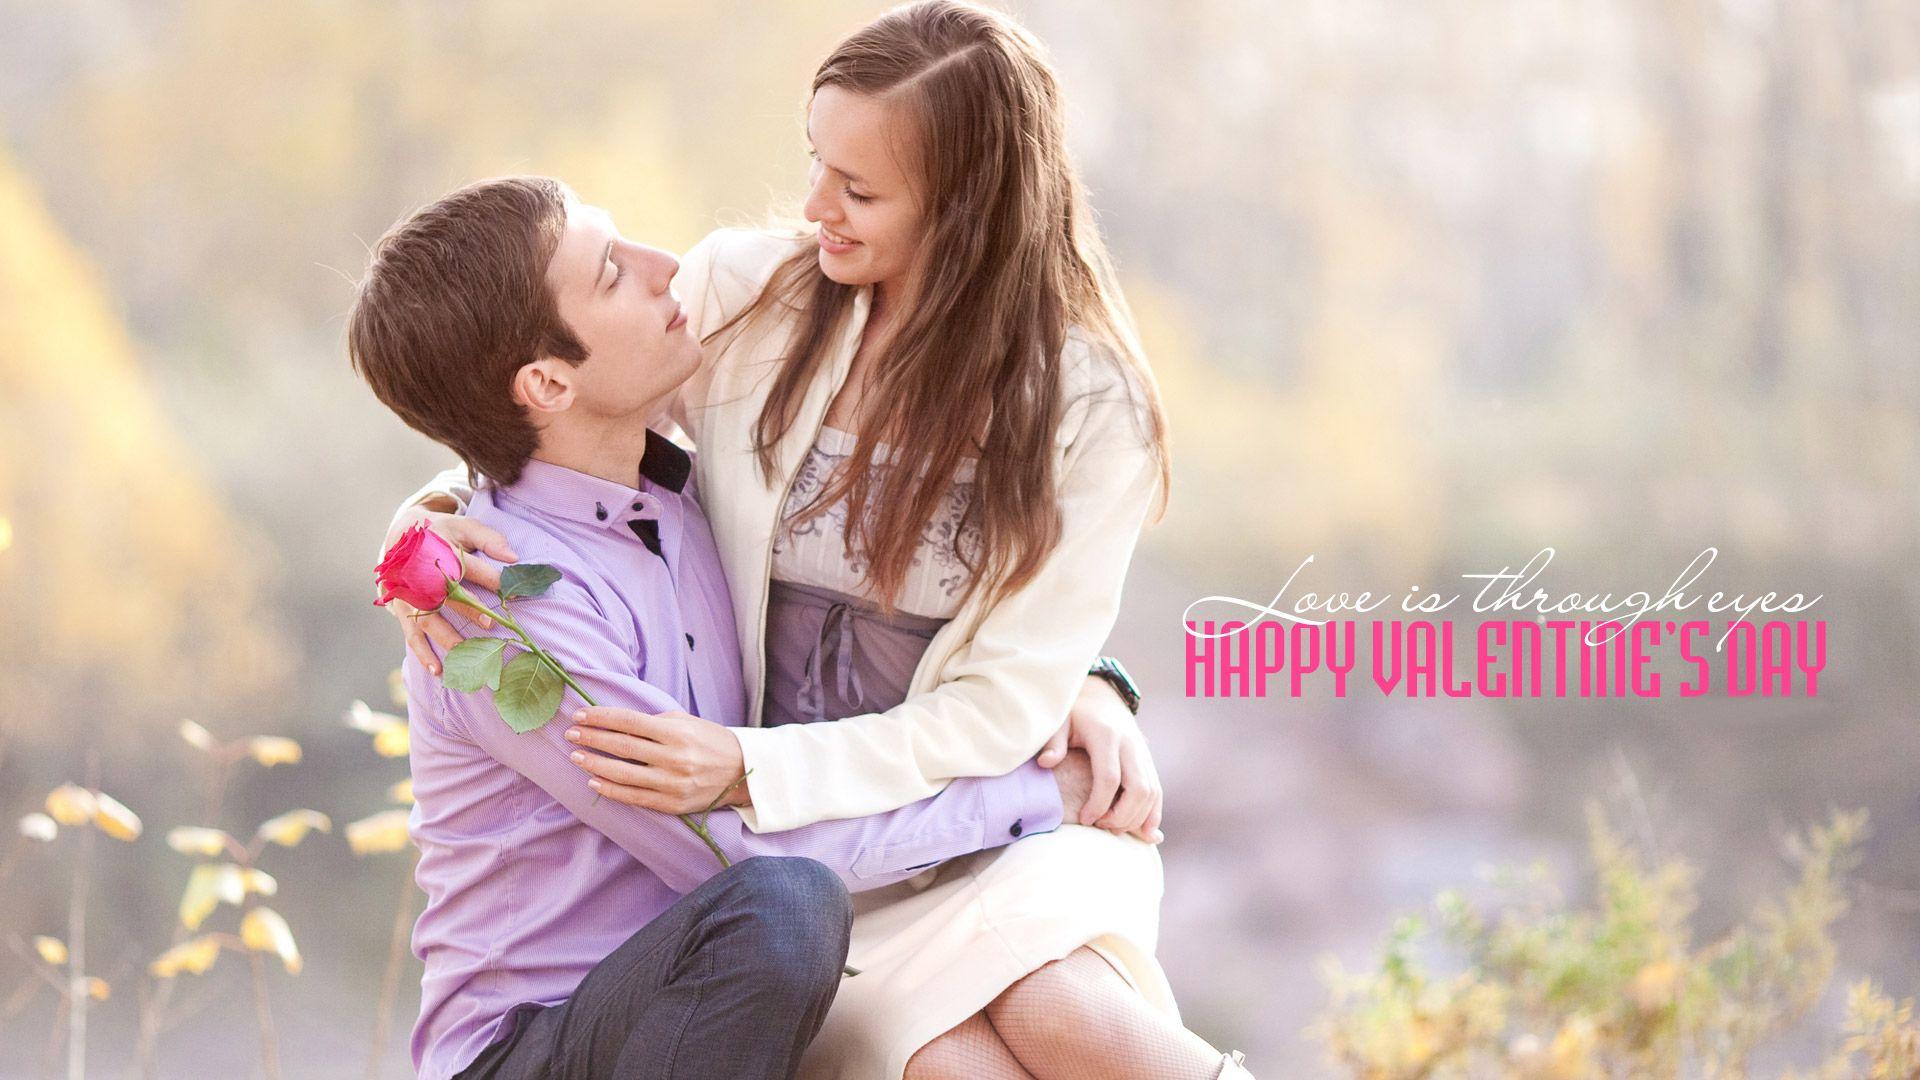 happy valentines day romantic wallpaper. Cute couple image, Love